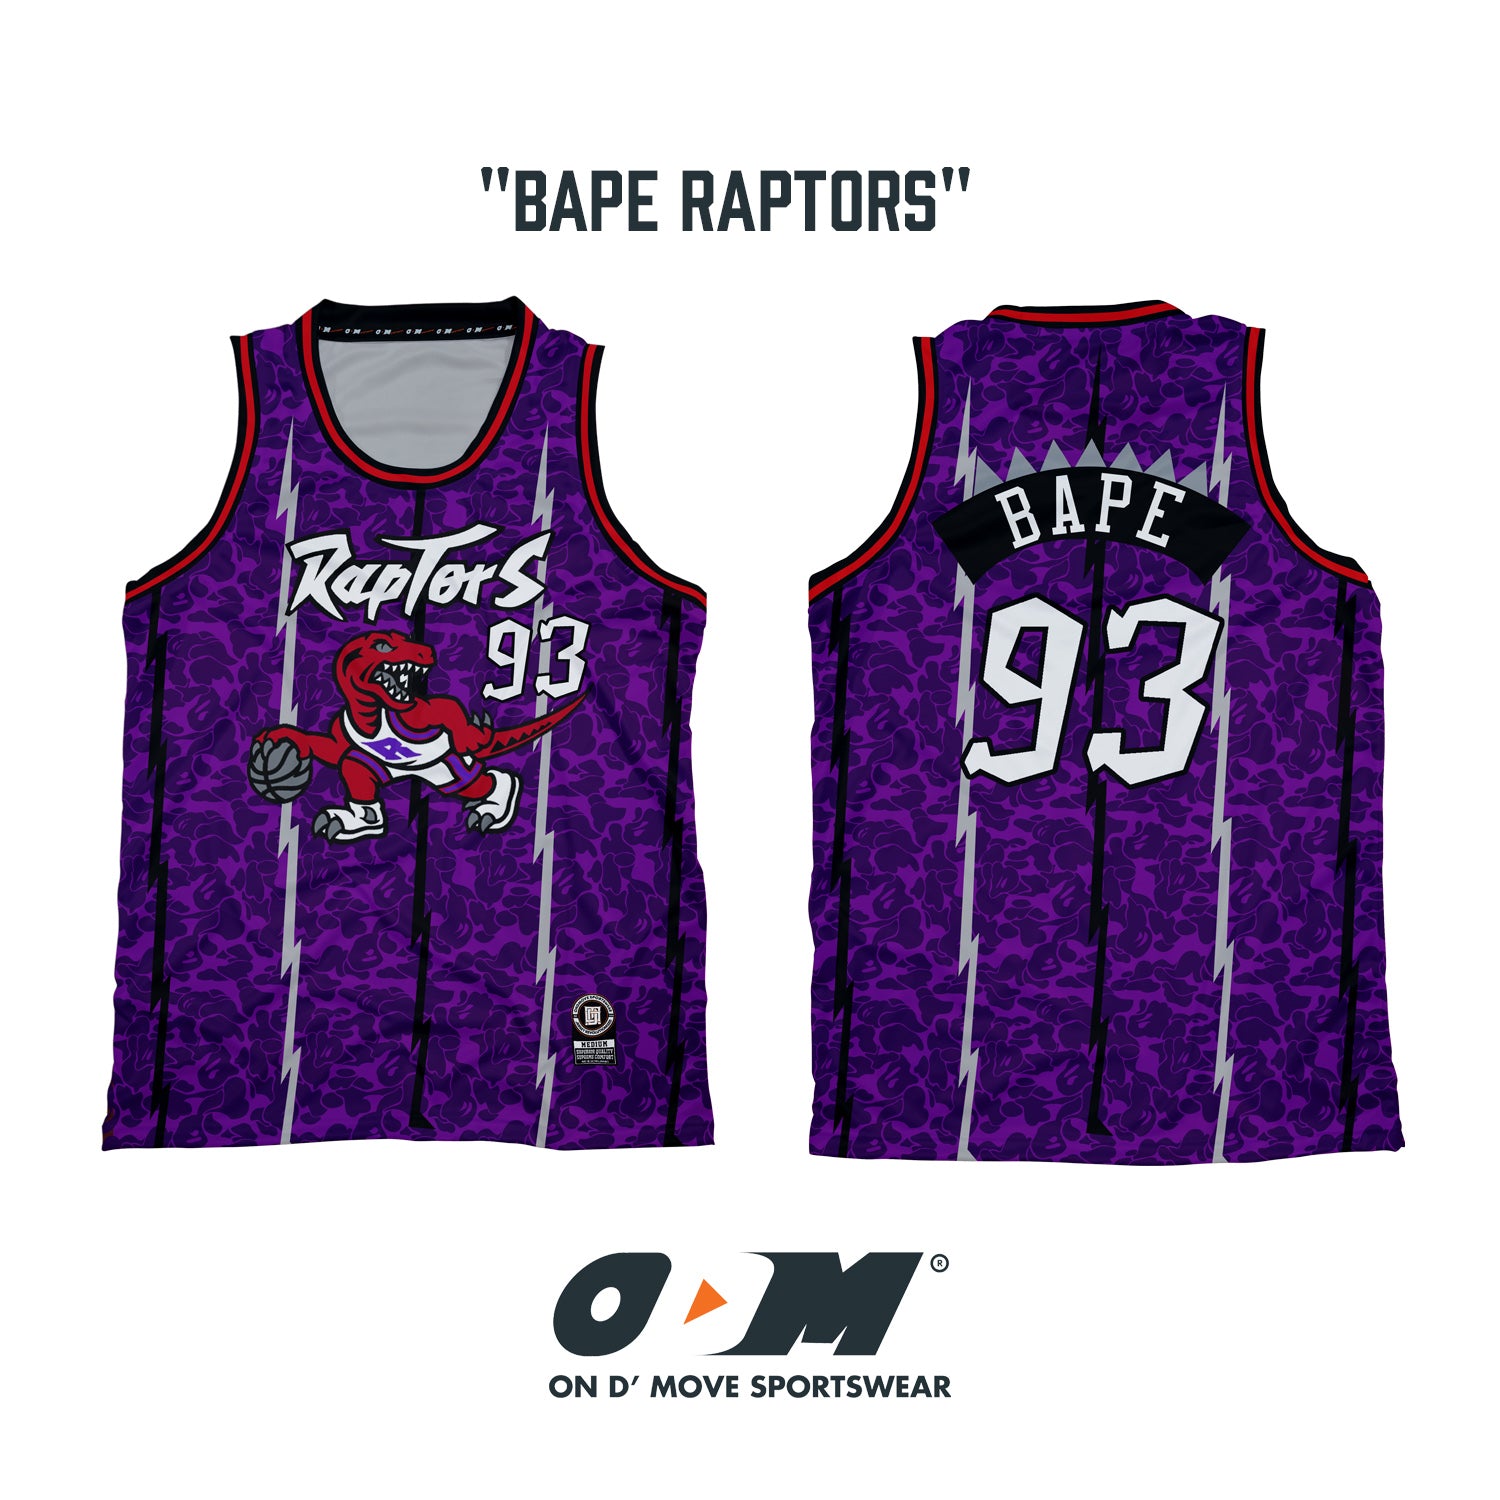 BAPE Raptors Jersey